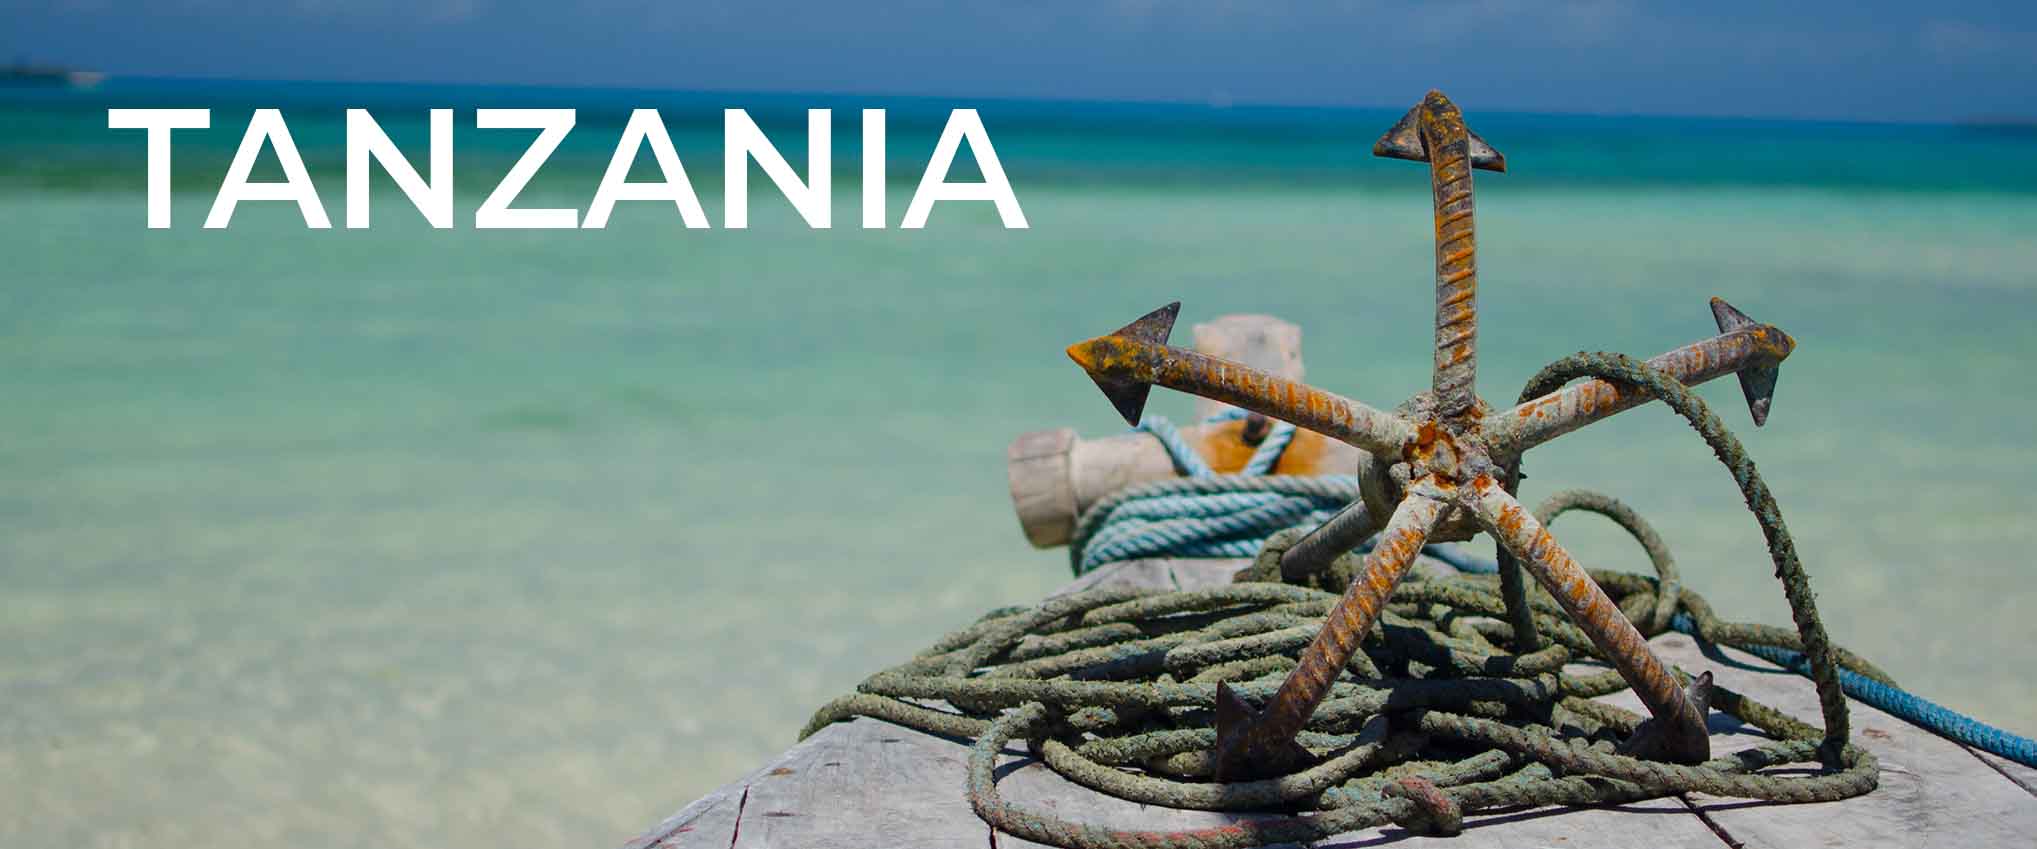 Tanzania-page-banner